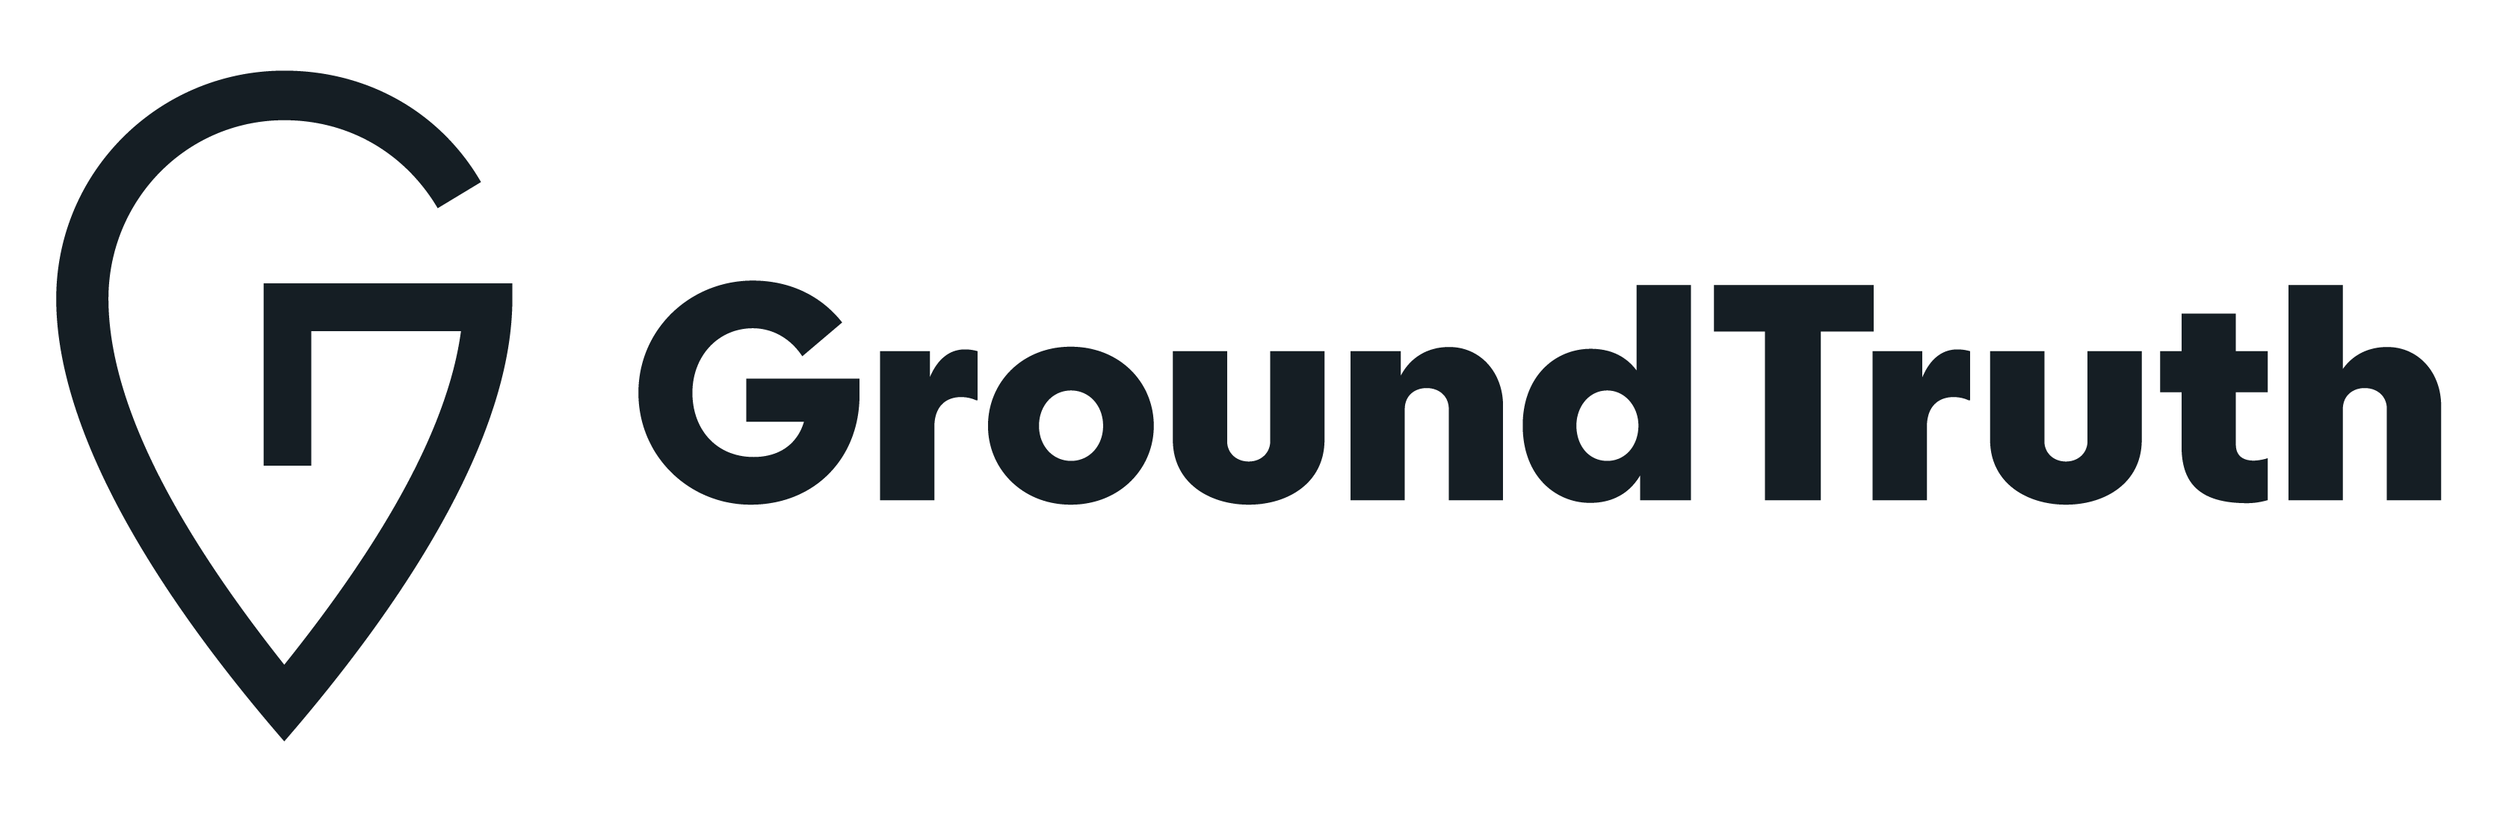 GroundTruth